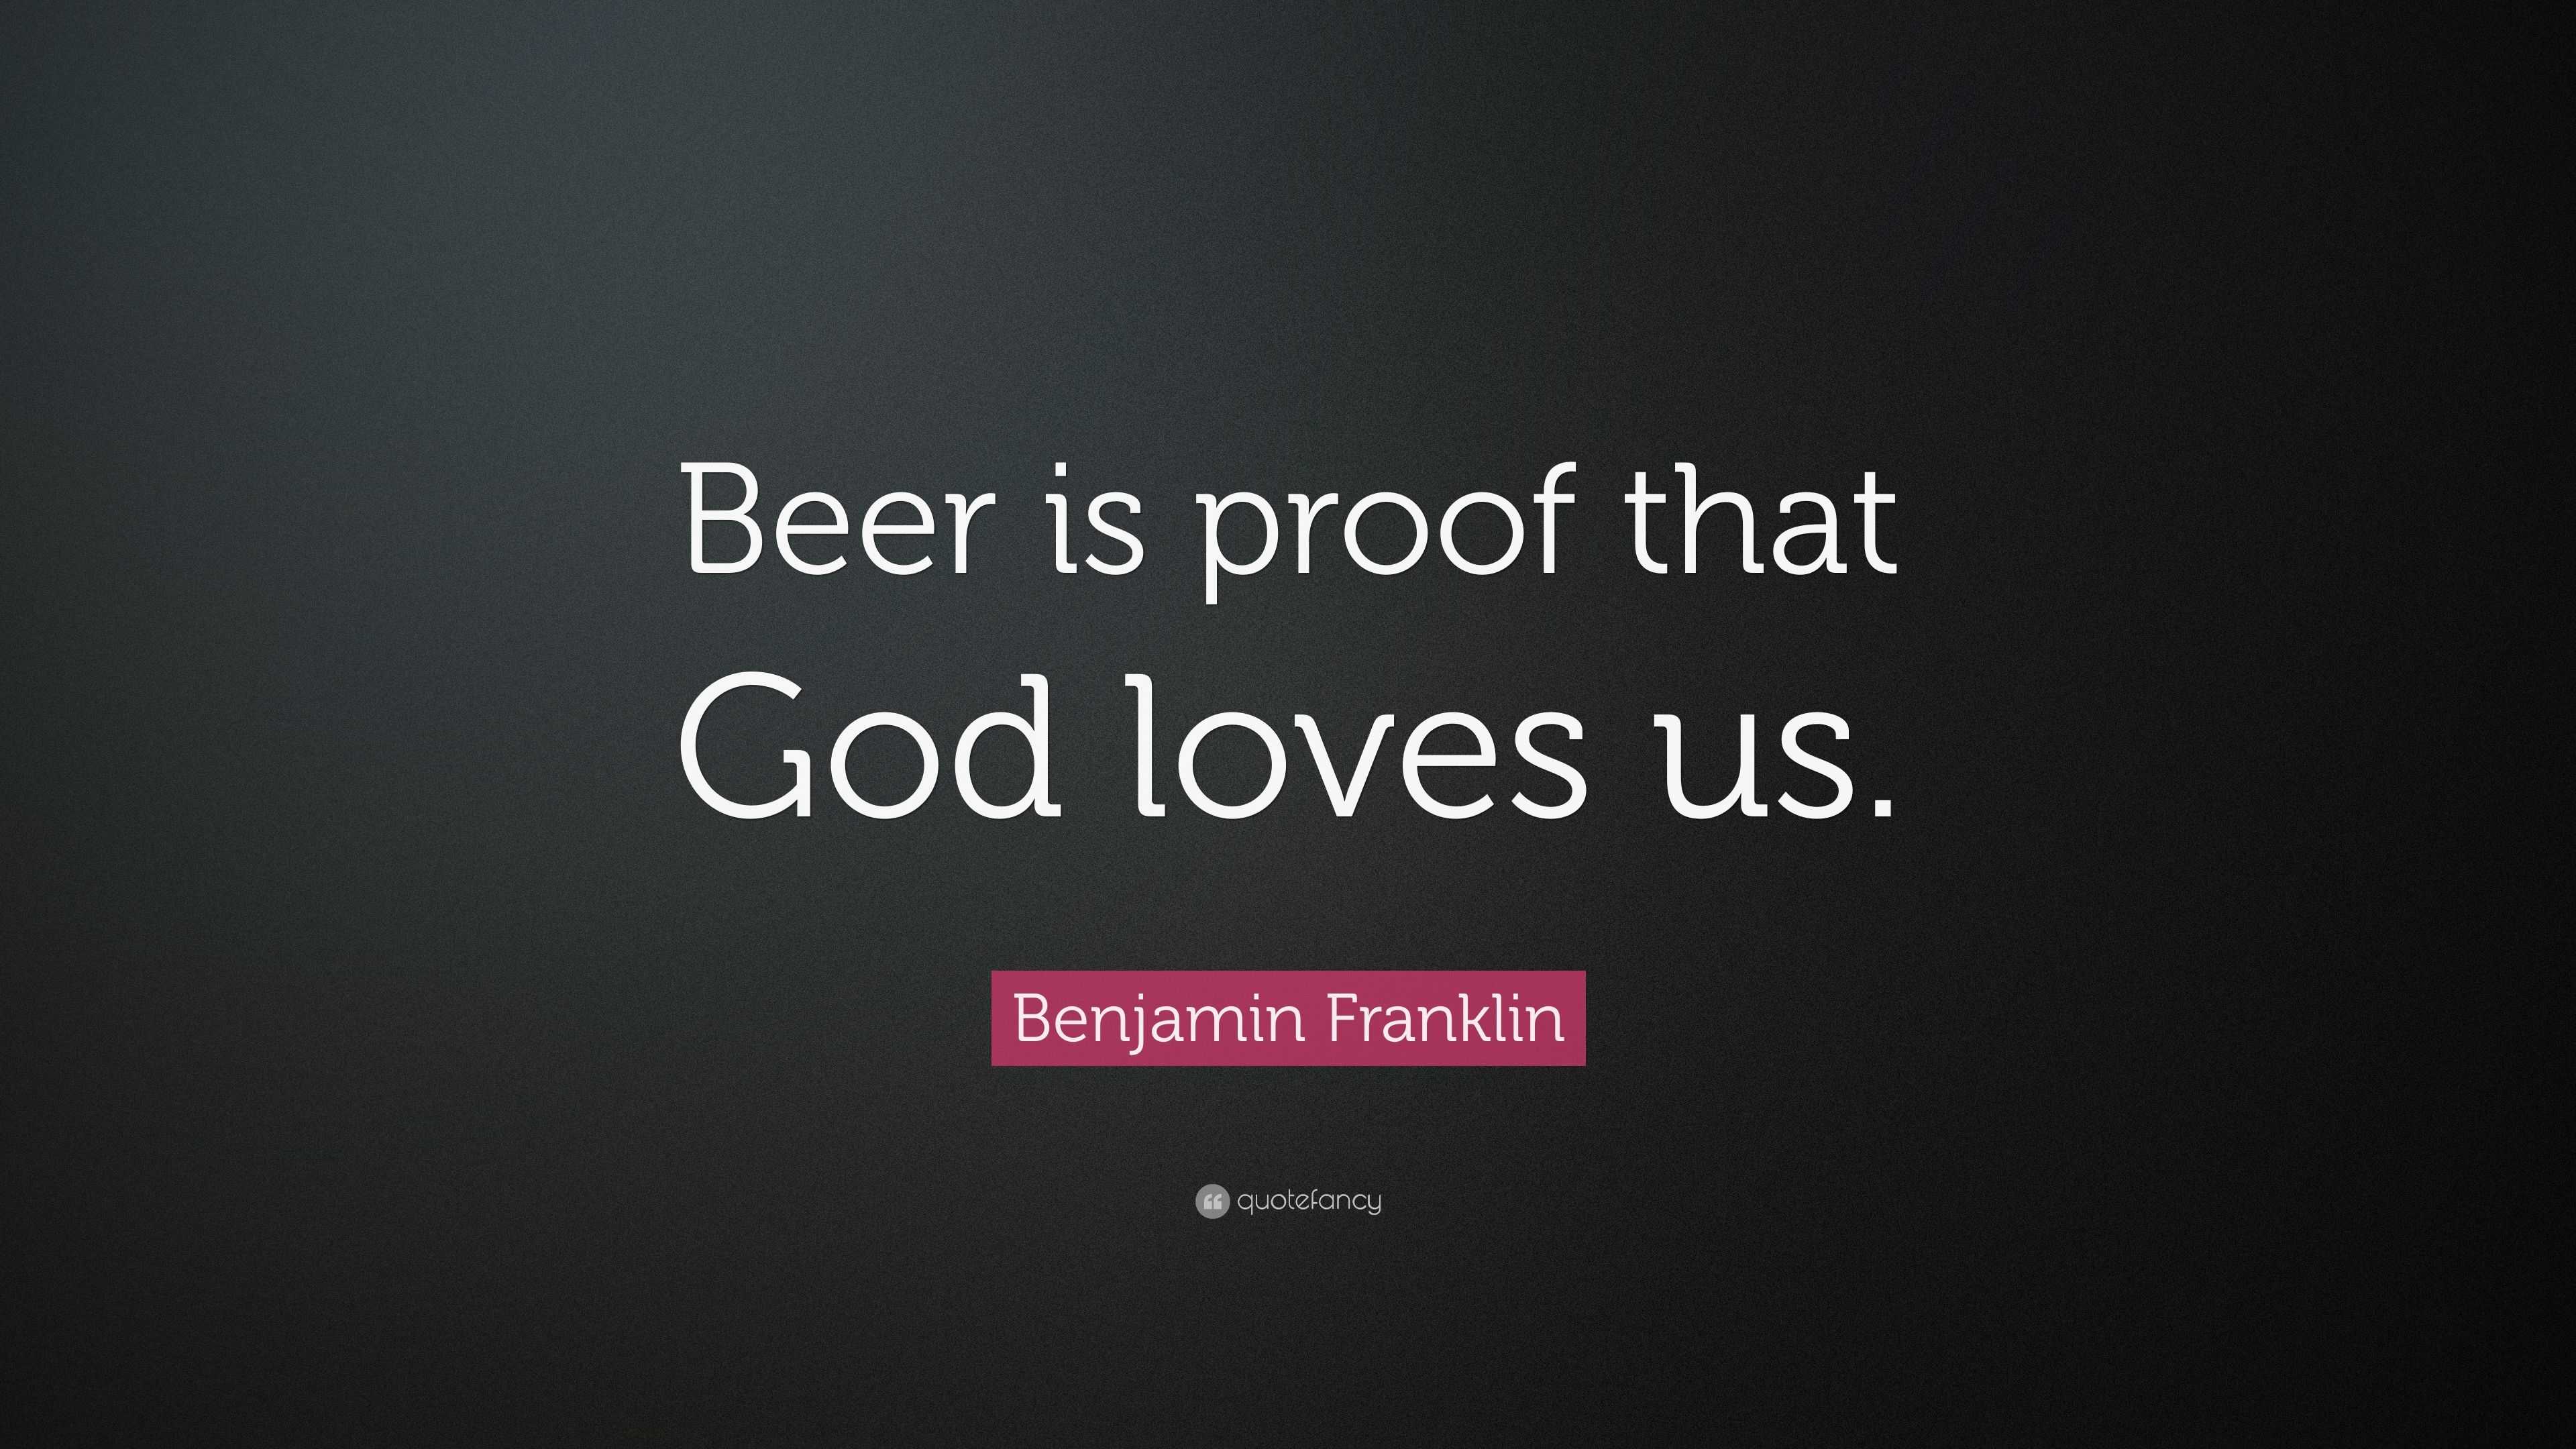 Benjamin Franklin Quote “Beer is proof that God loves us ”